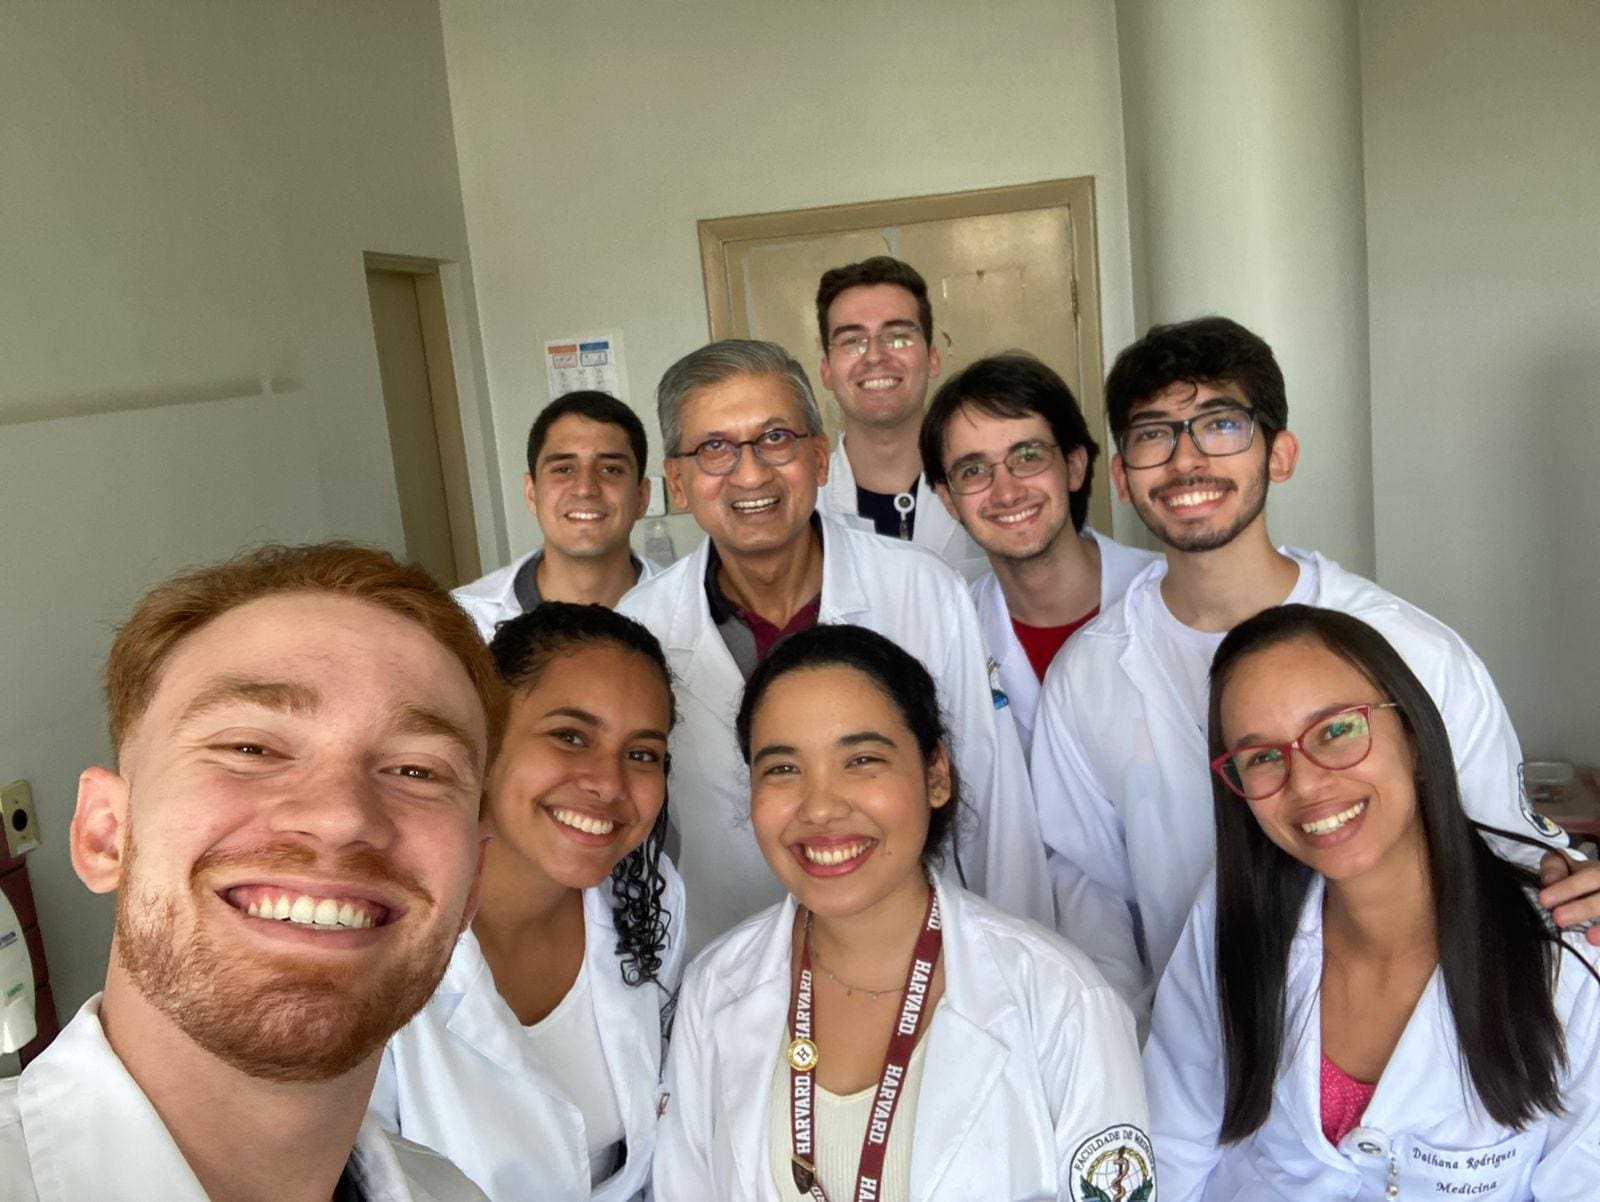 Geriatra e professor na Faculdade de Medicina da UFMG, Luís Felipe Ravic de Miranda (ao centro) com alunos de medicina, do 5 período